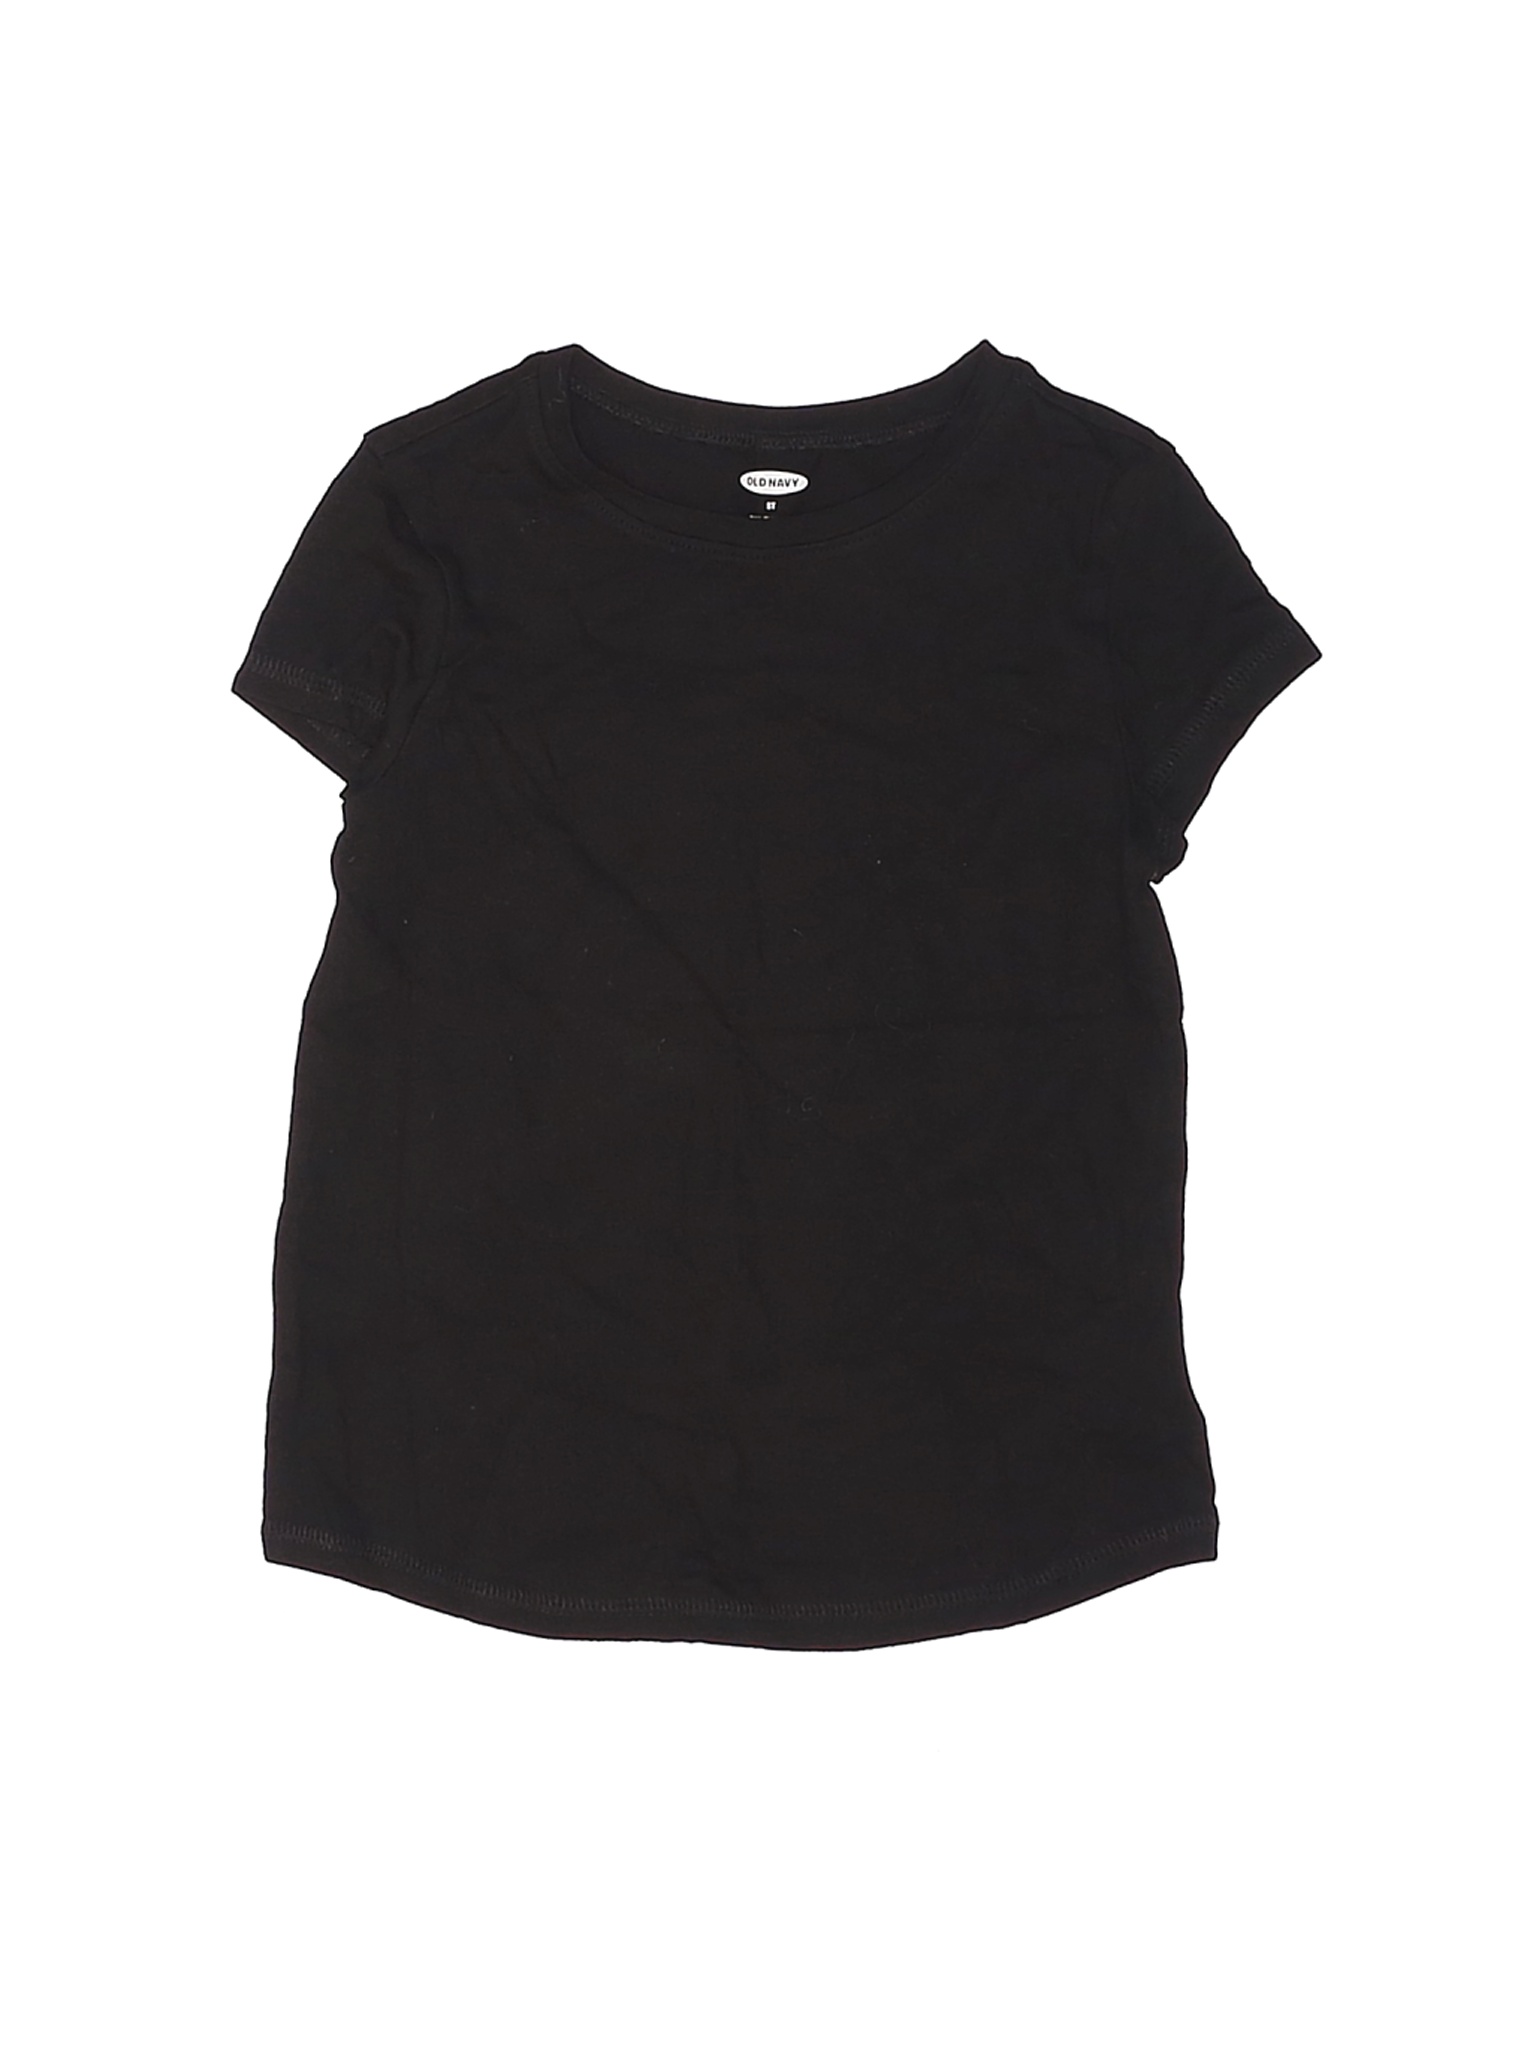 Old Navy Boys Black Short Sleeve T-Shirt 5T | eBay